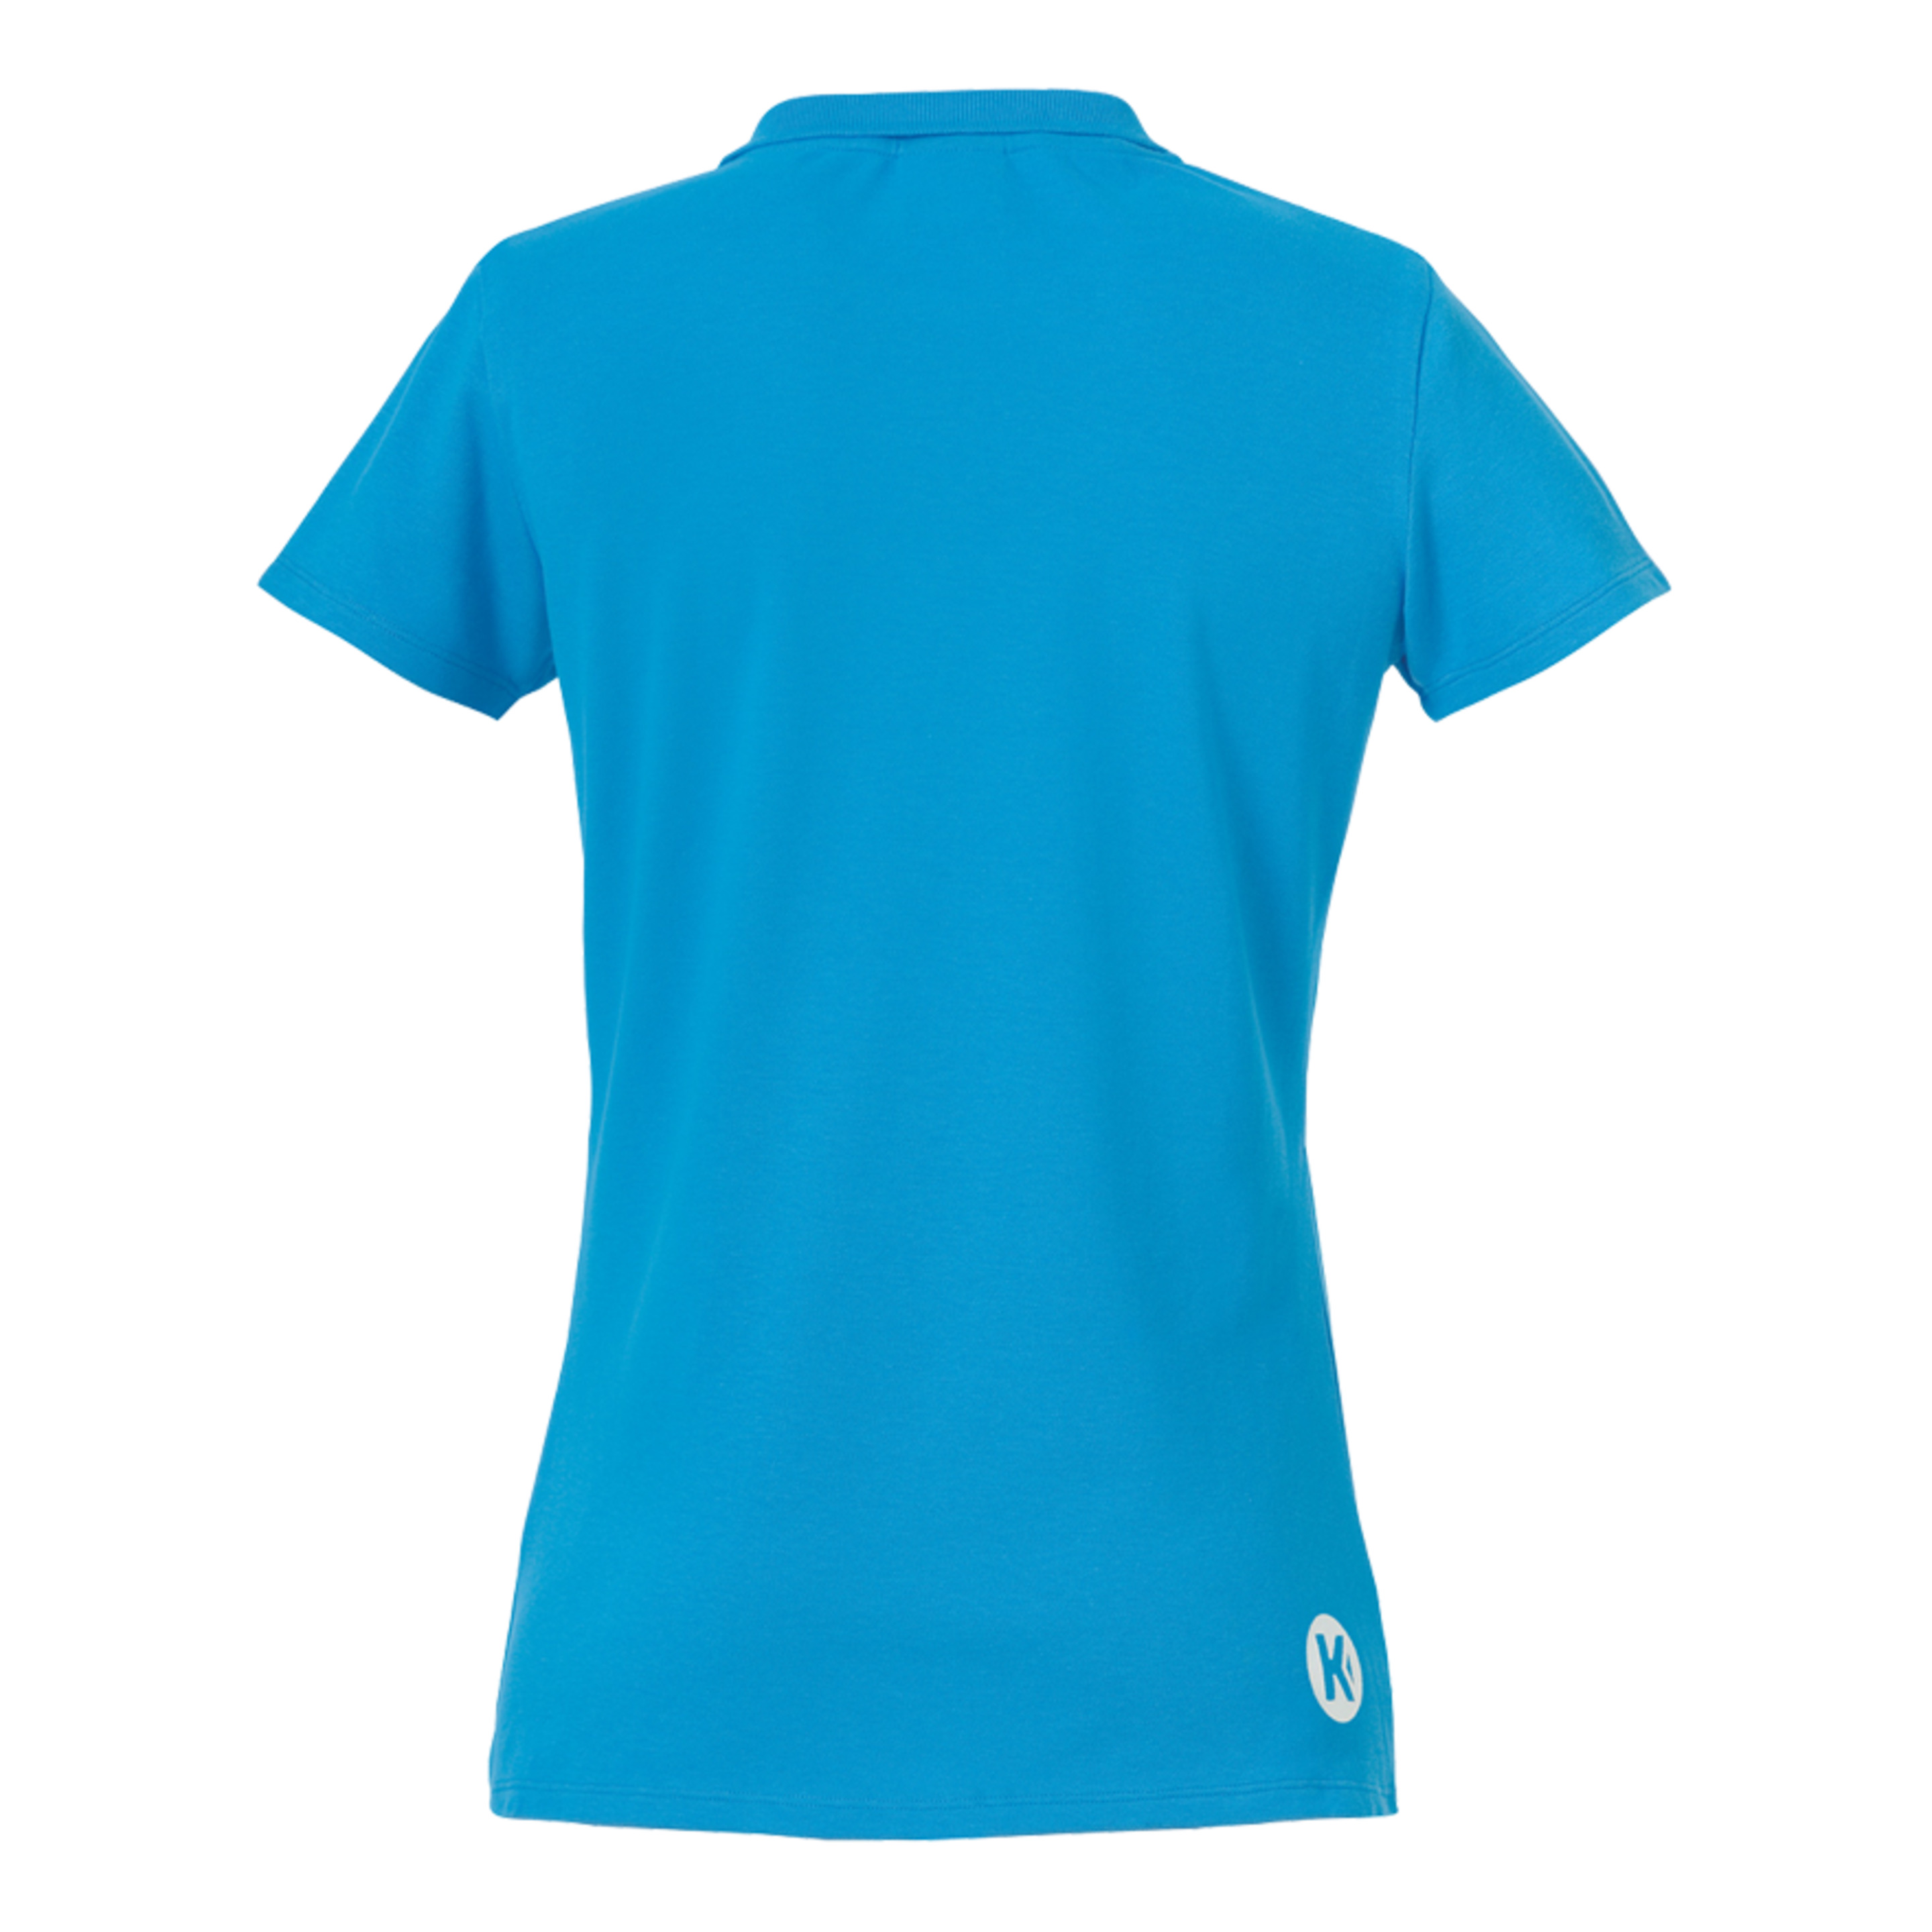 Polo Shirt De Mujer Kempa Azul Kempa - azul  MKP